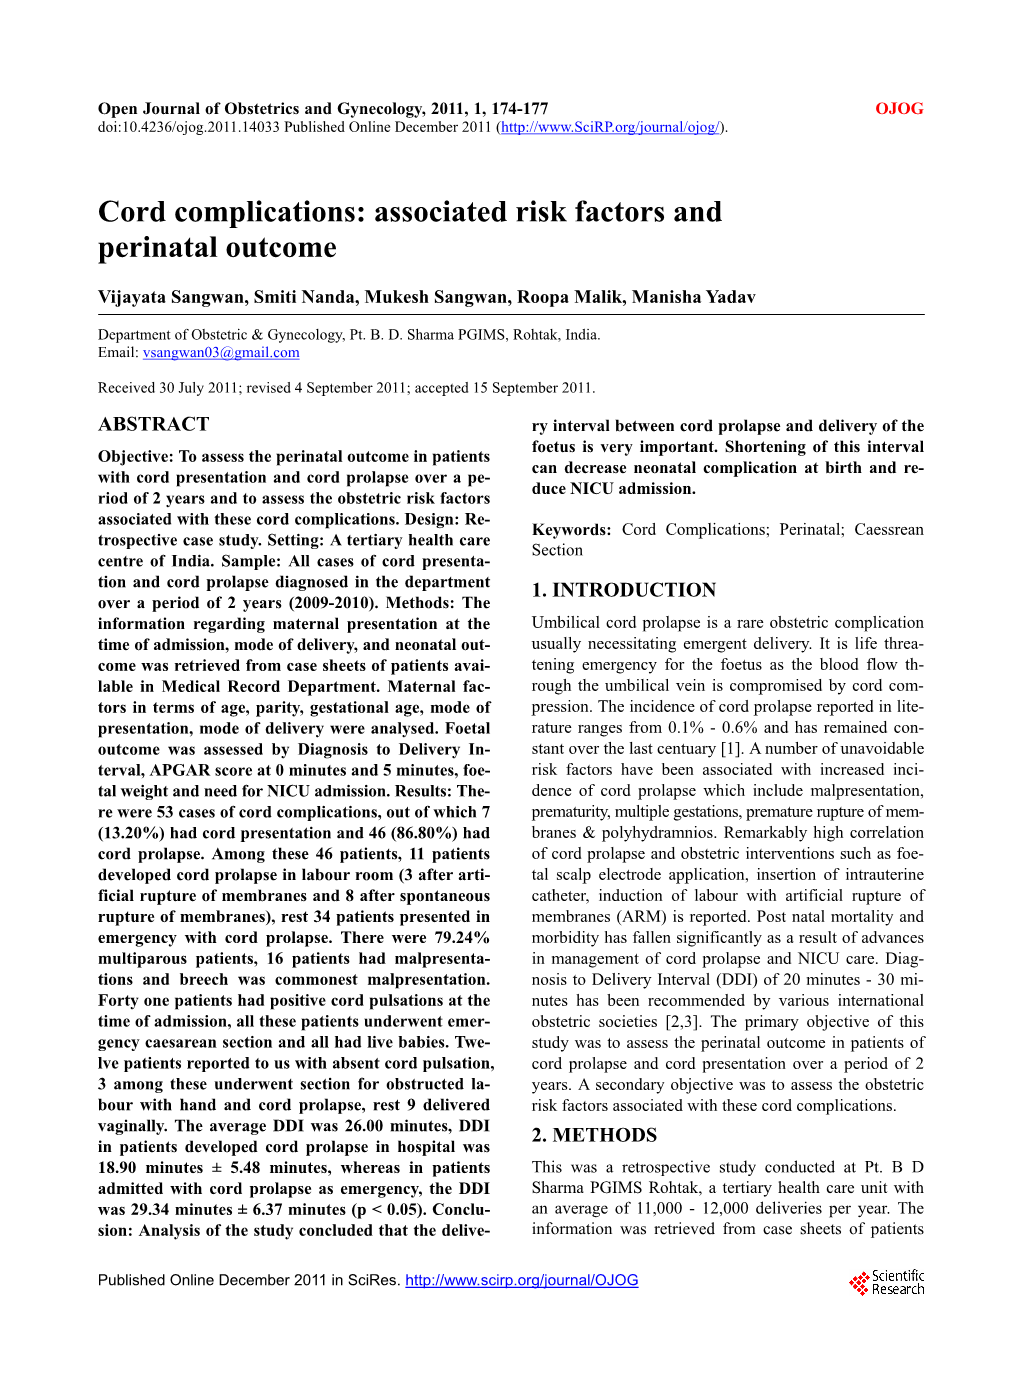 Cord Complications: Associated Risk Factors and Perinatal Outcome